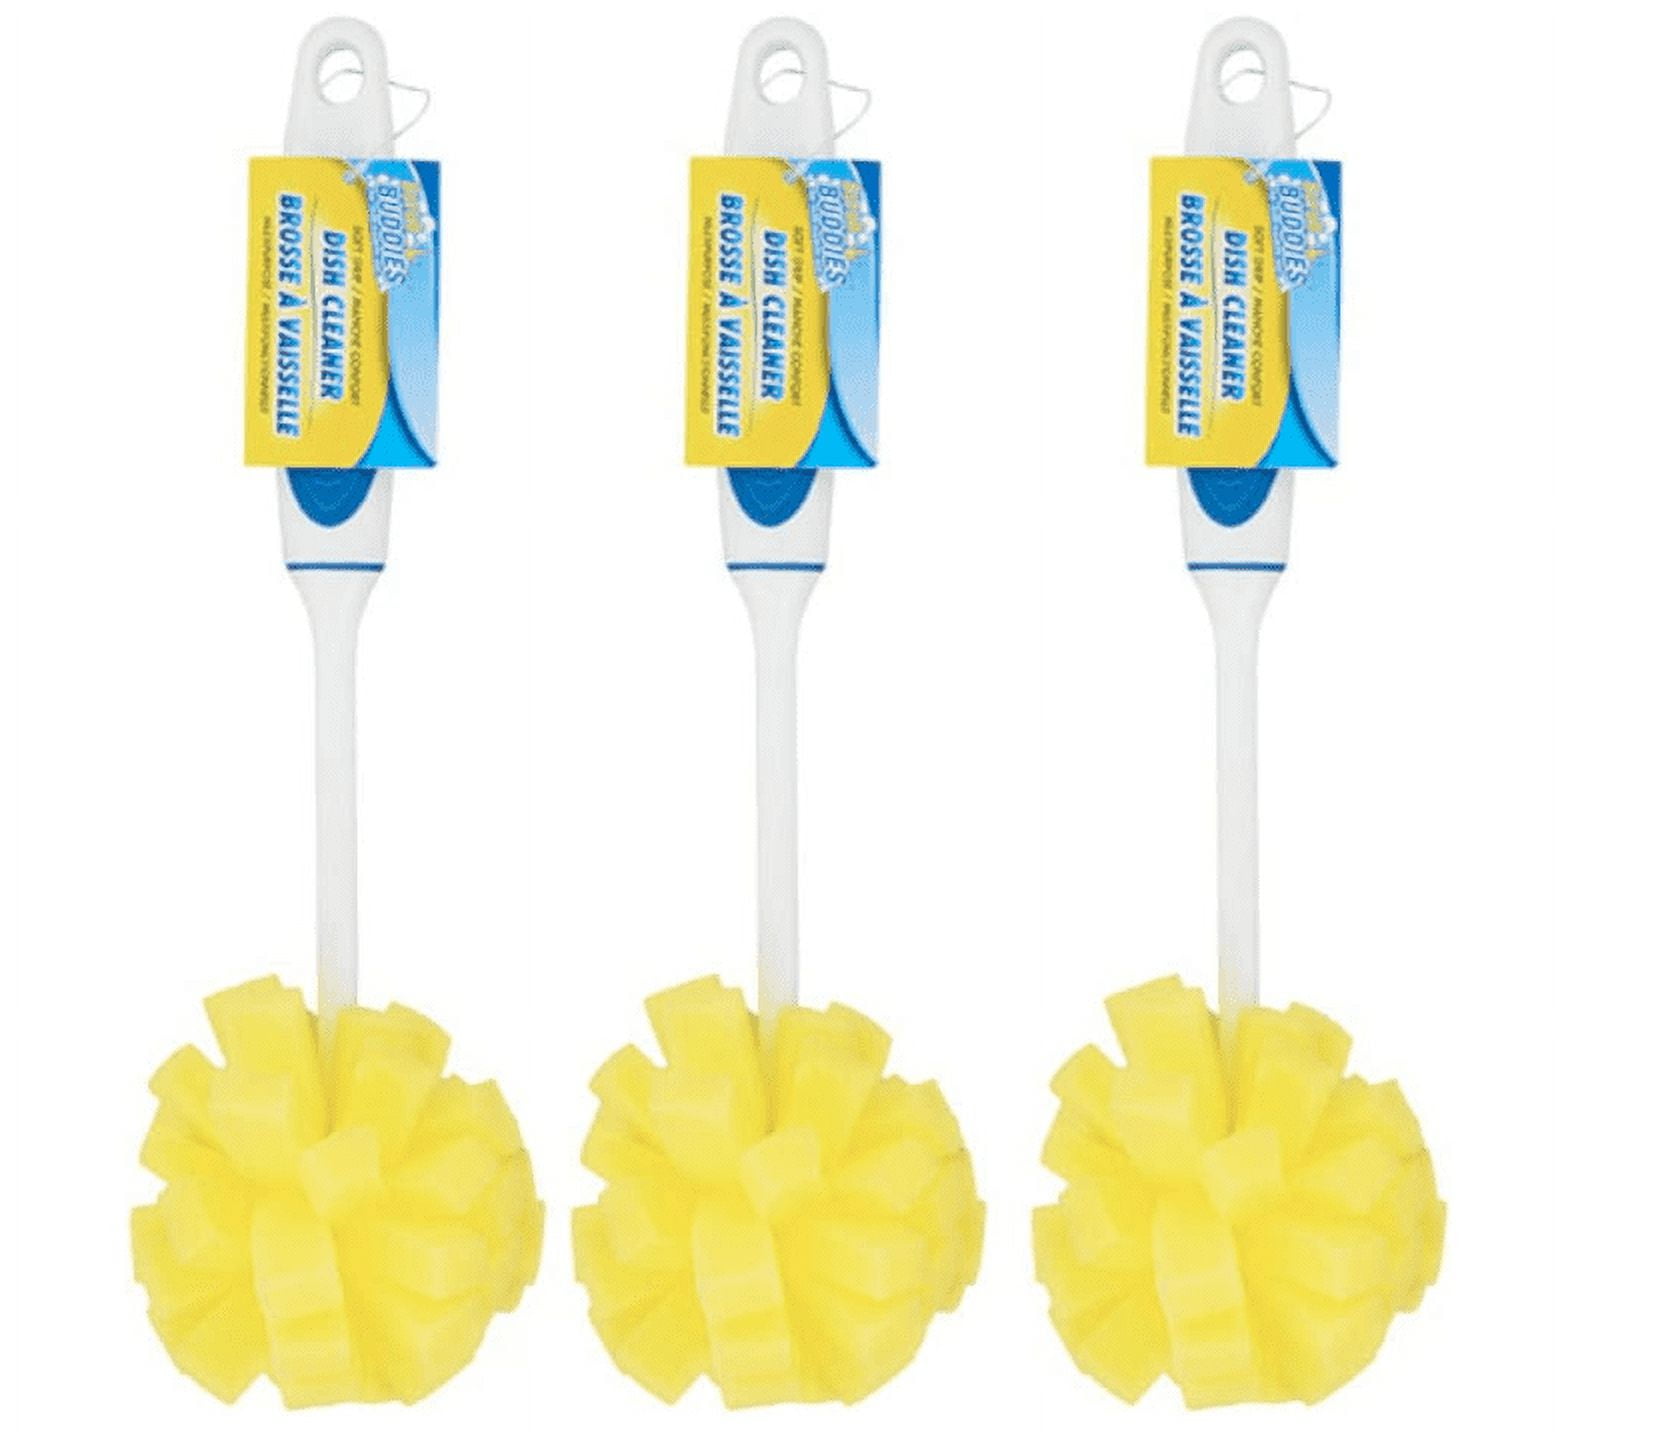  Scrub Buddies 6 Pack of Nail Guard Sponges : Health & Household